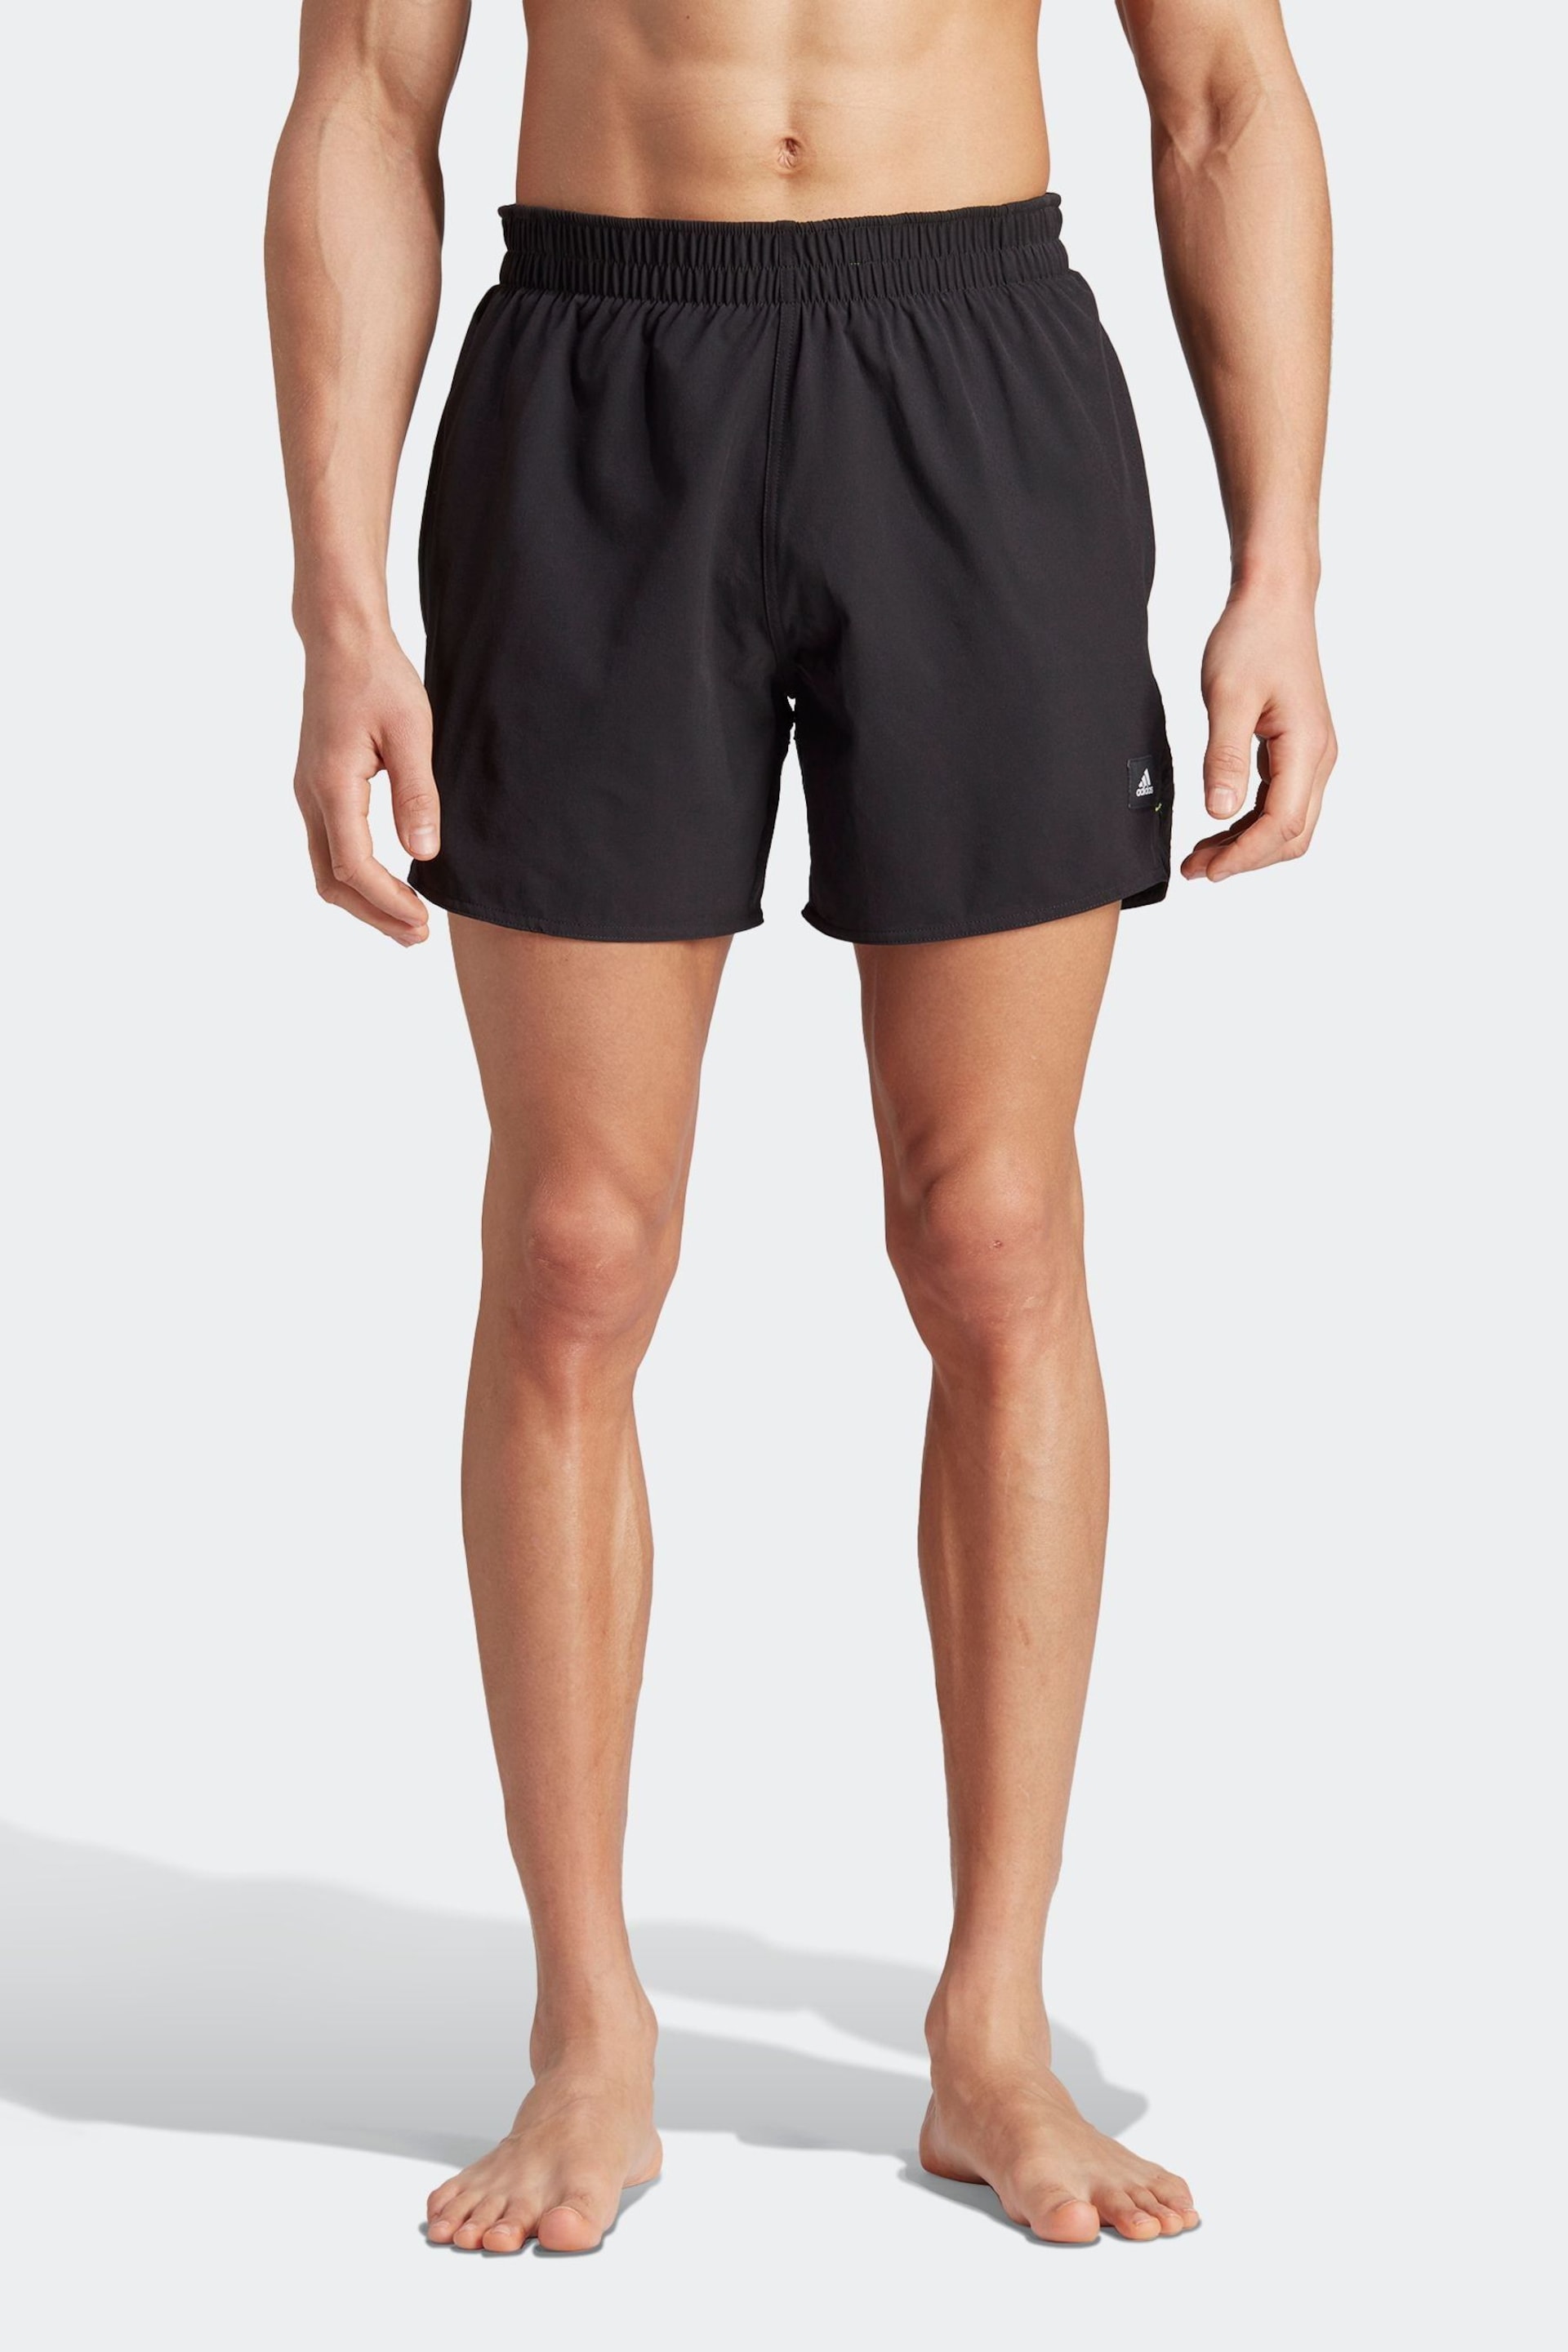 adidas Black Versatile Swim Shorts - Image 1 of 6